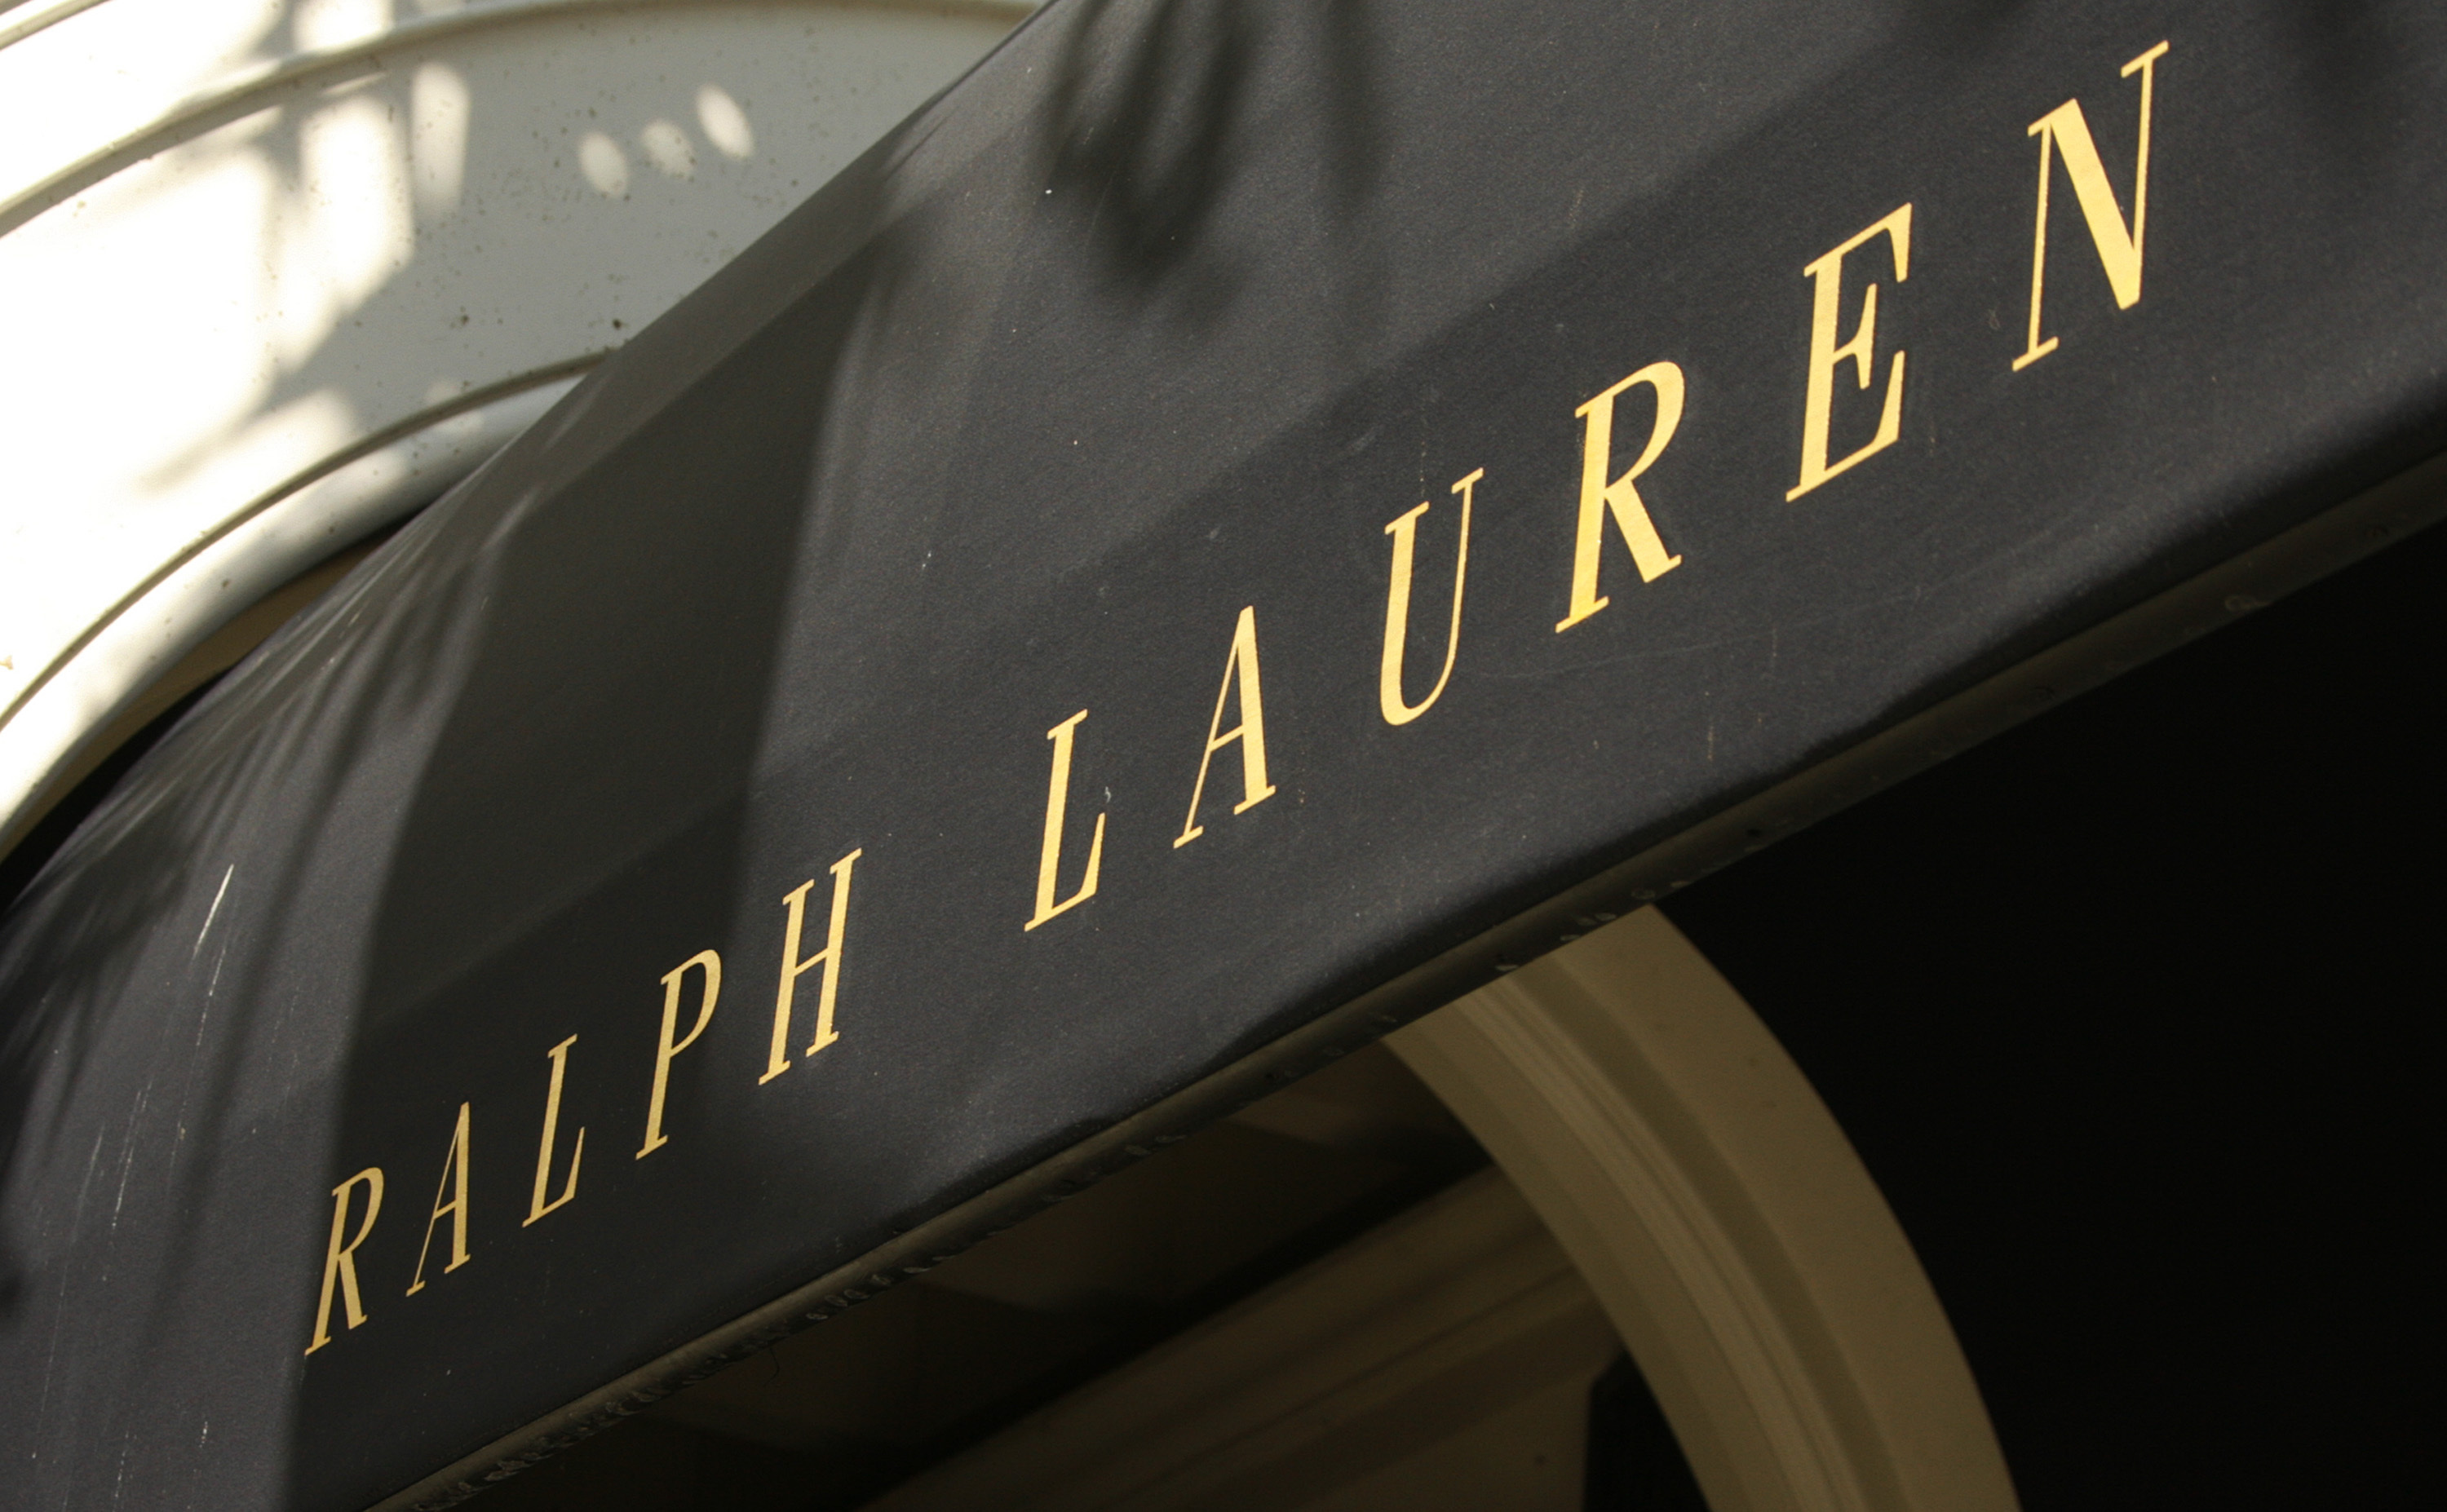 Canada's corporate watchdog probes Ralph Lauren on alleged use of